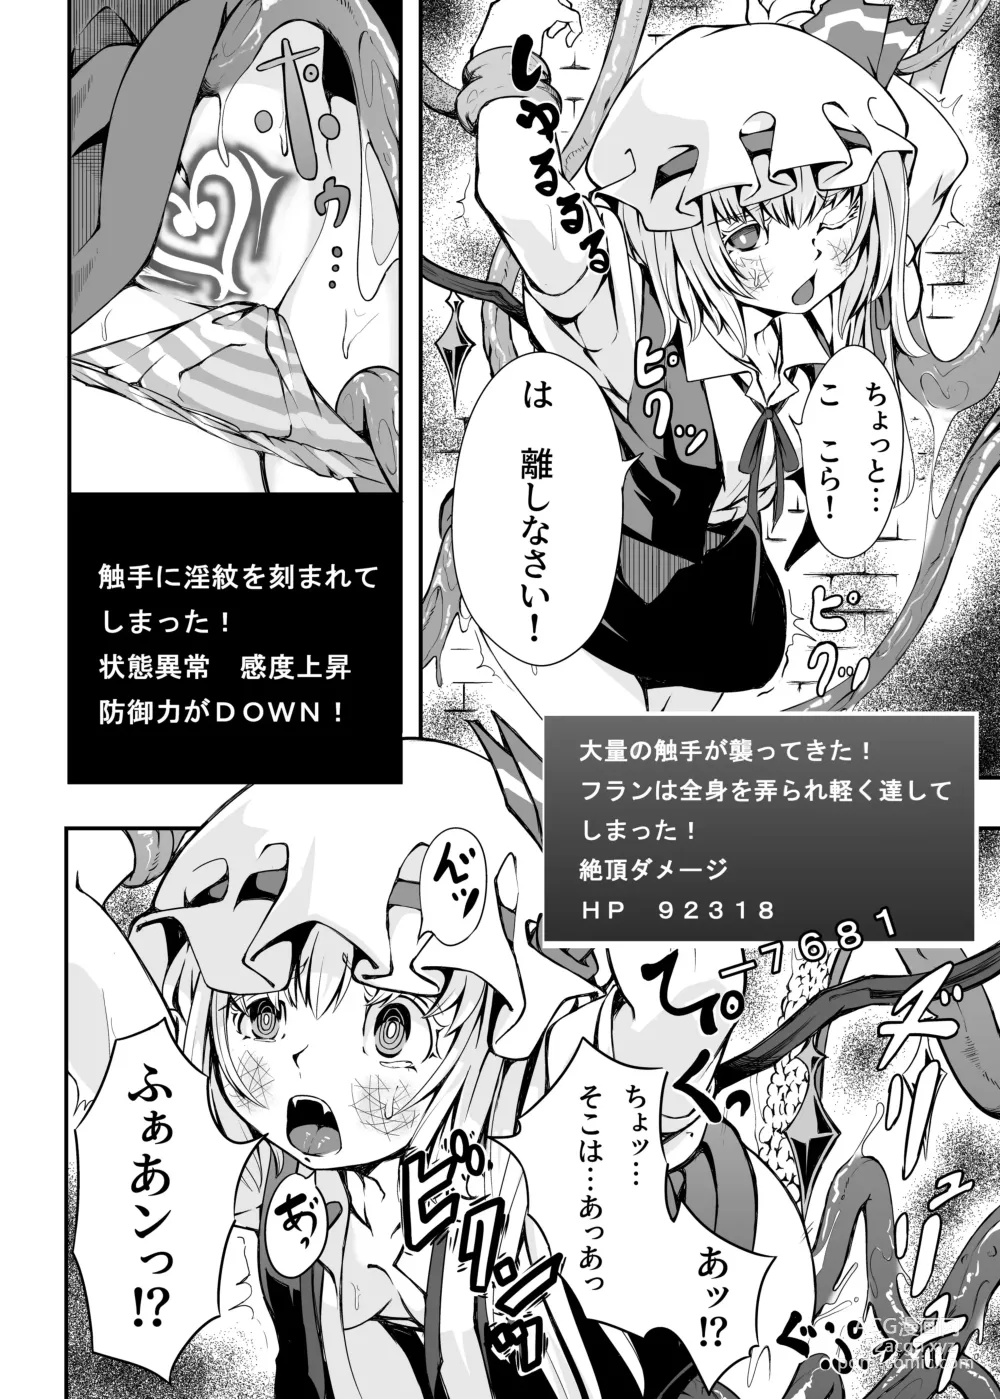 Page 7 of doujinshi Flan-chan and ETD